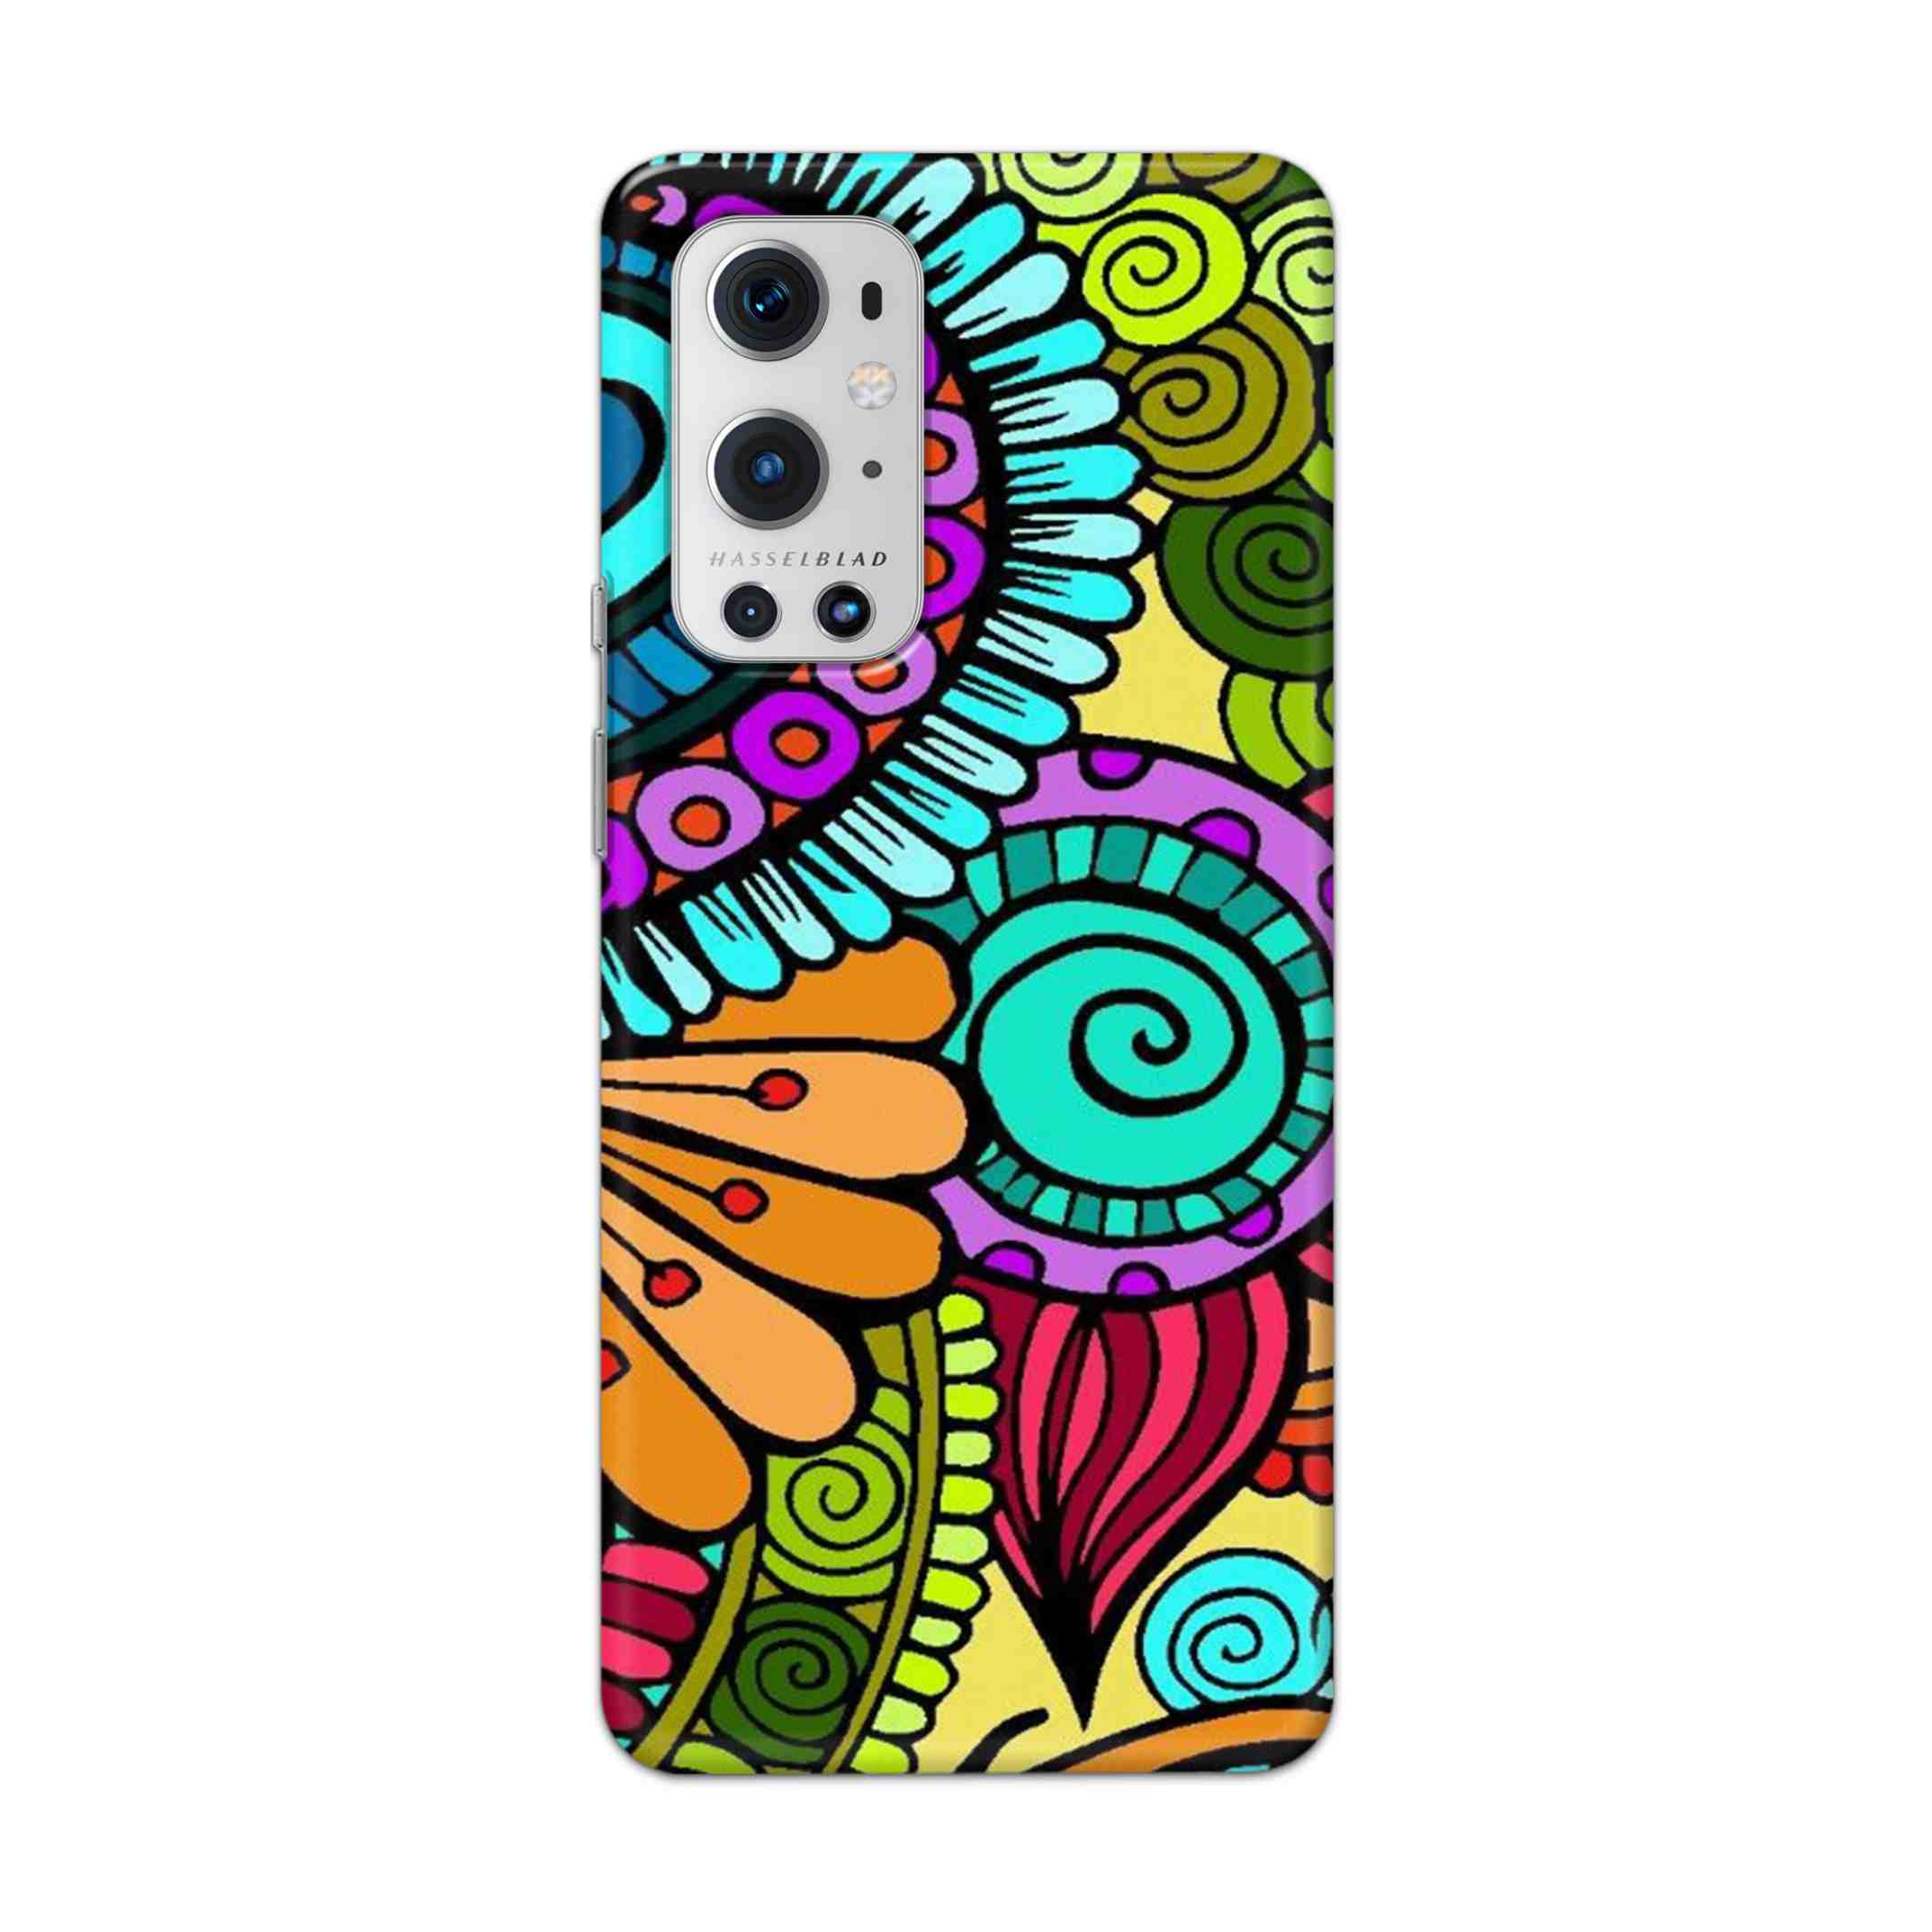 Buy The Kalachakra Mandala Hard Back Mobile Phone Case Cover For OnePlus 9 Pro Online